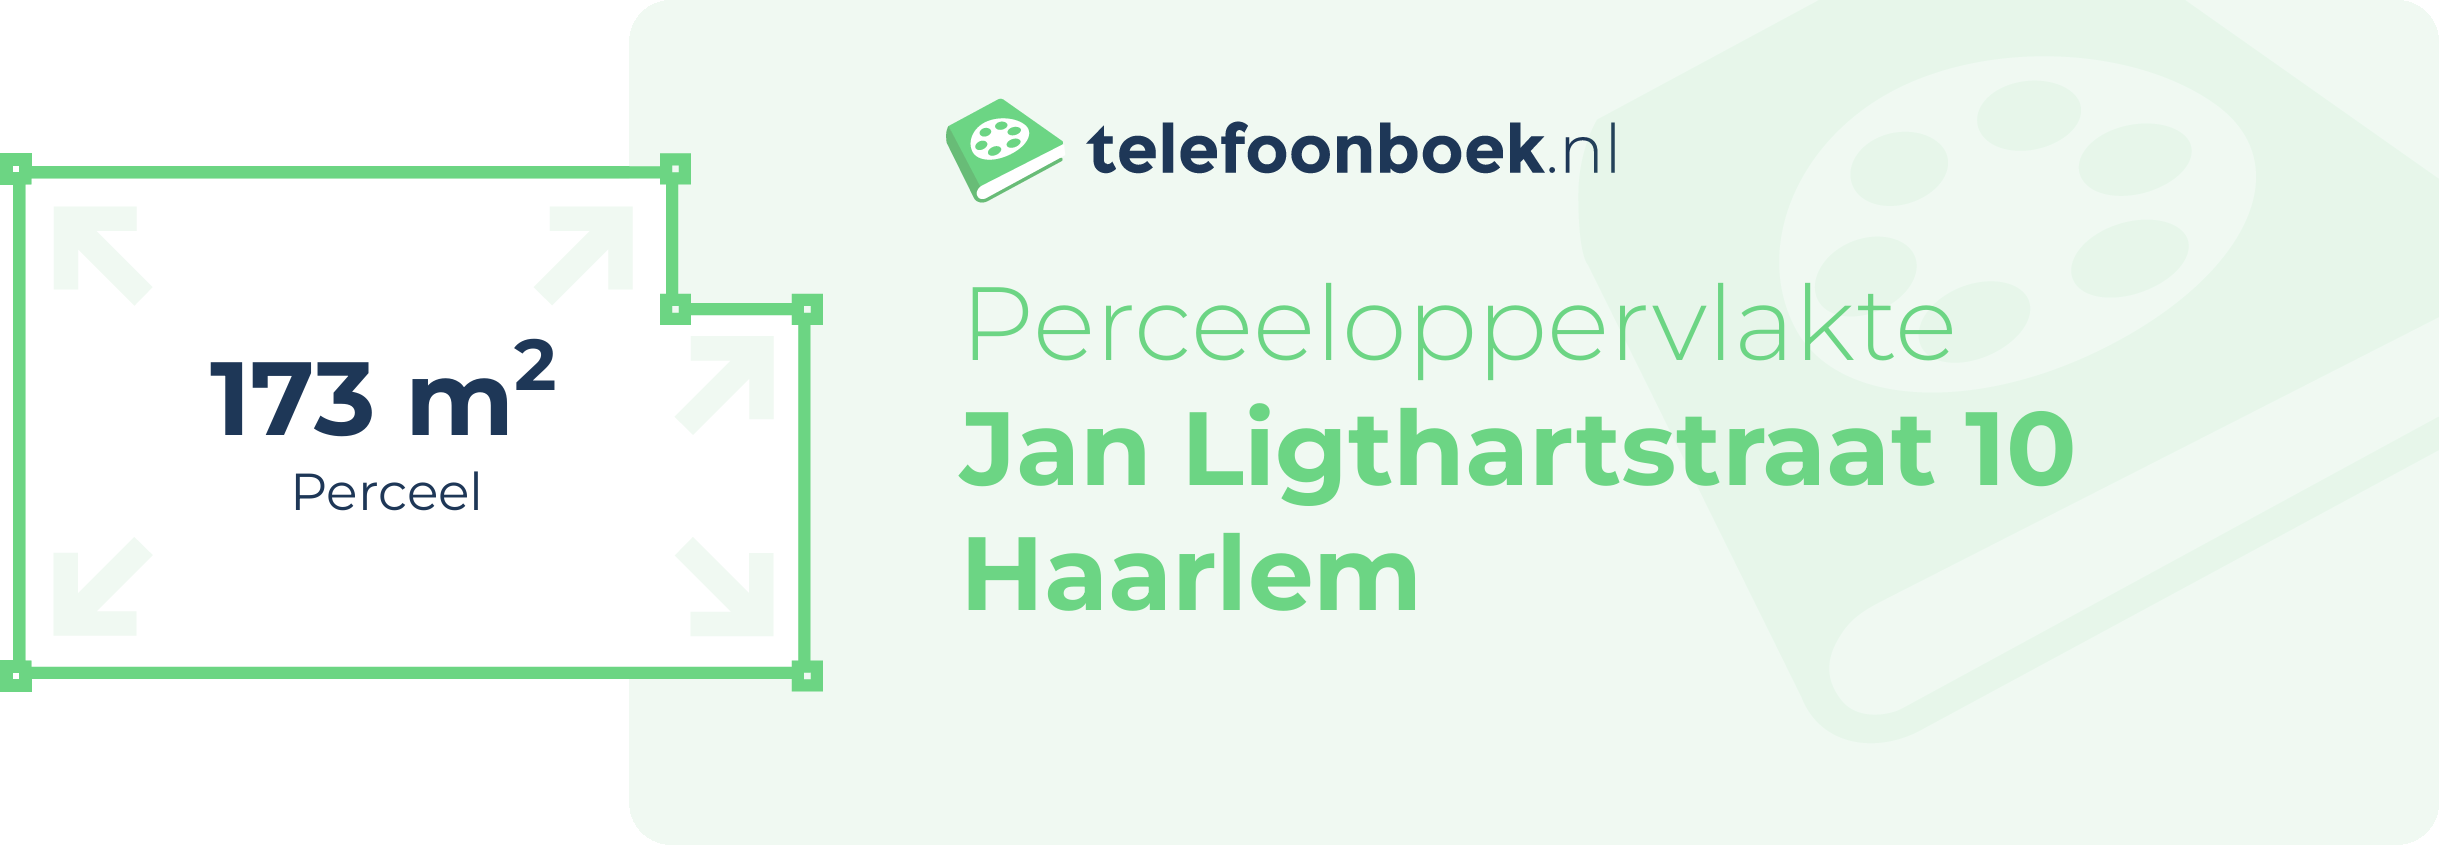 Perceeloppervlakte Jan Ligthartstraat 10 Haarlem